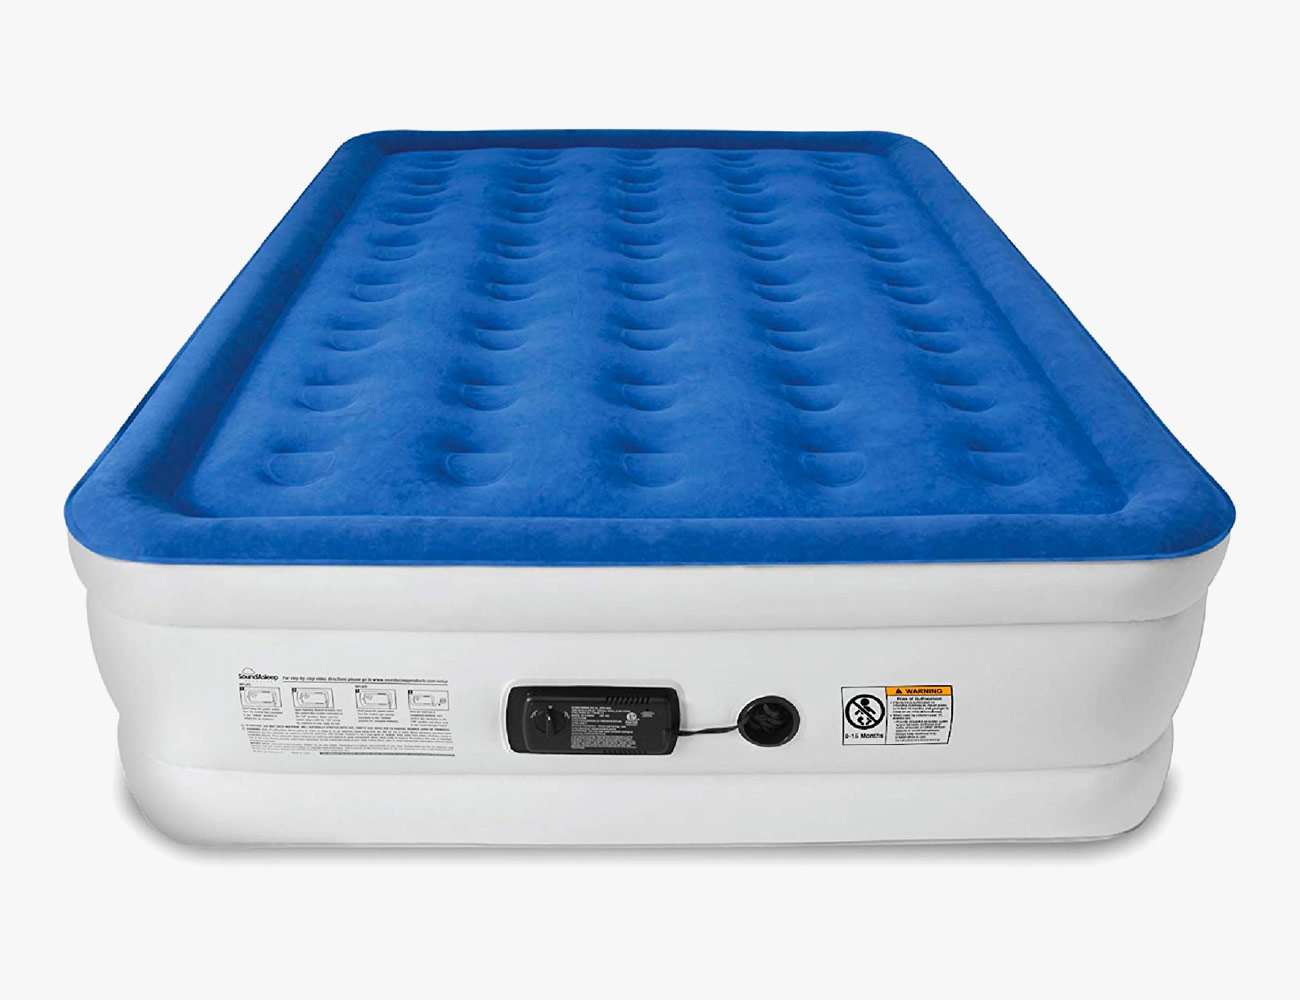 find the best air mattresses